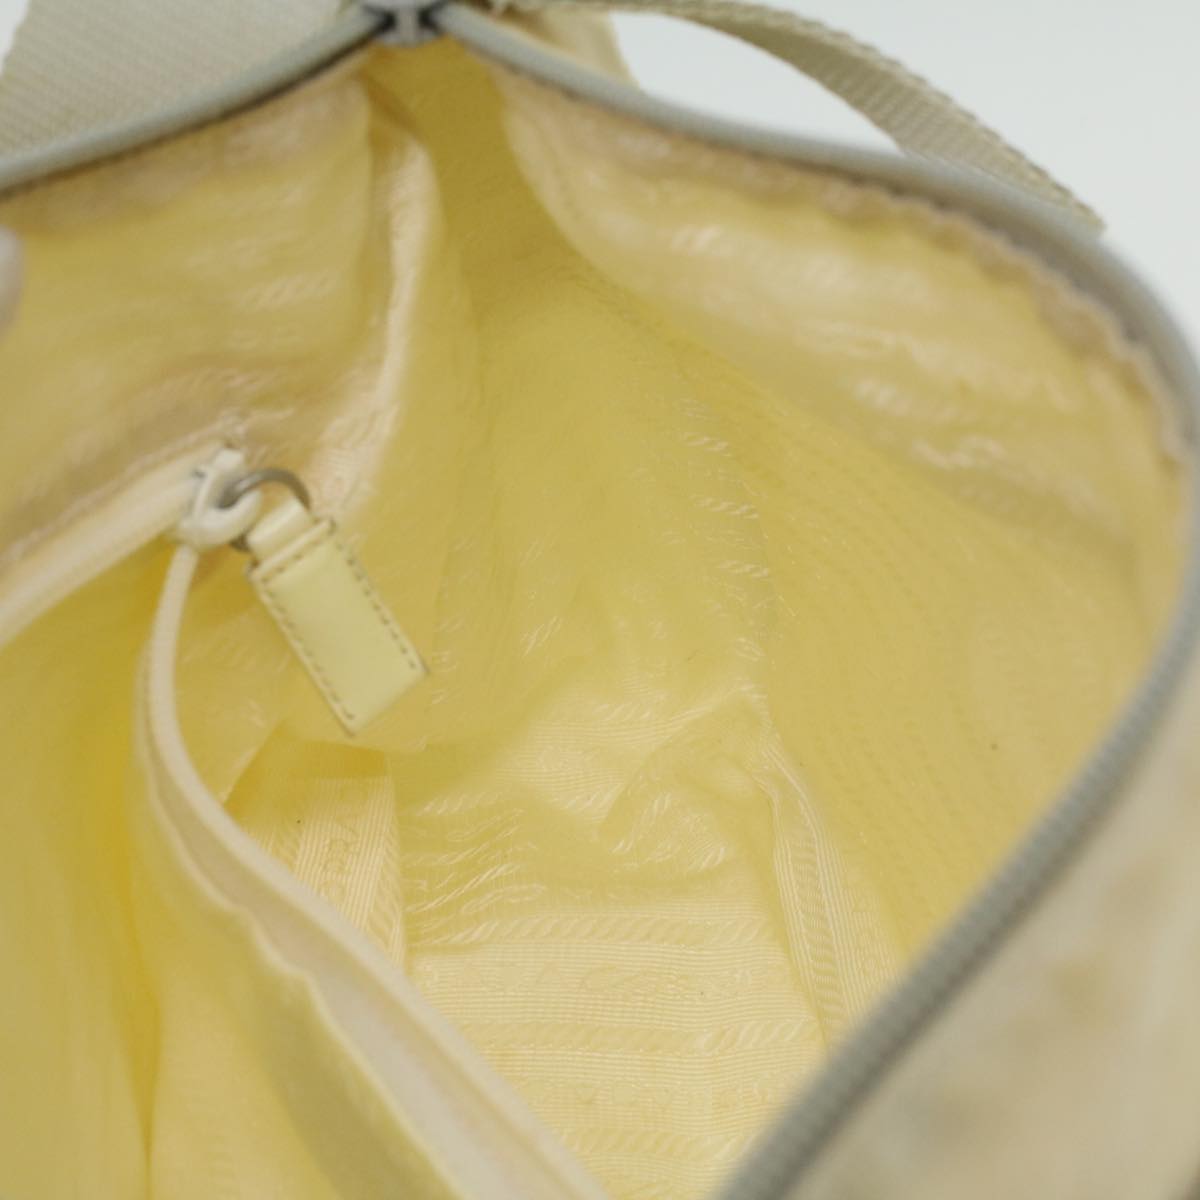 PRADA Shoulder Bag Nylon Cream Auth 34363